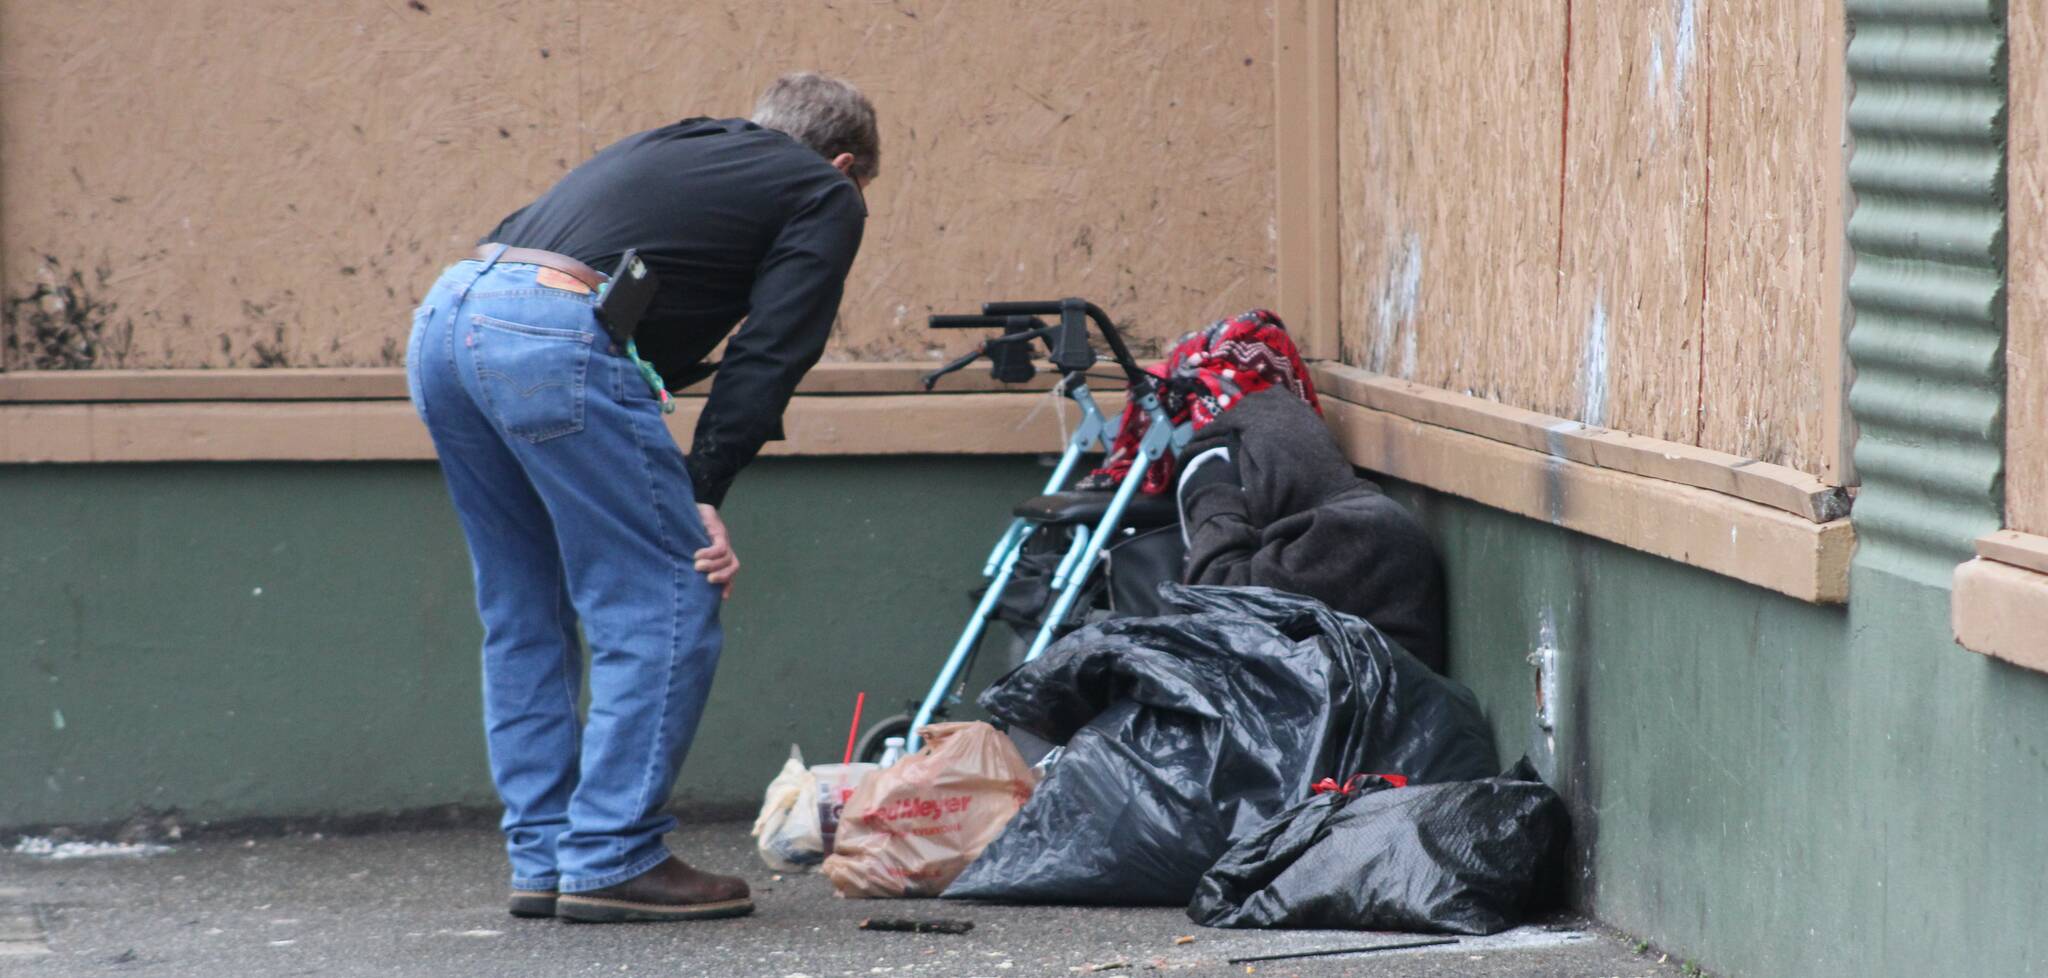 Elisha Meyer/Kitsap News Group
A conversation with a homeless person near the Salvation Army’s seasonal shelter.